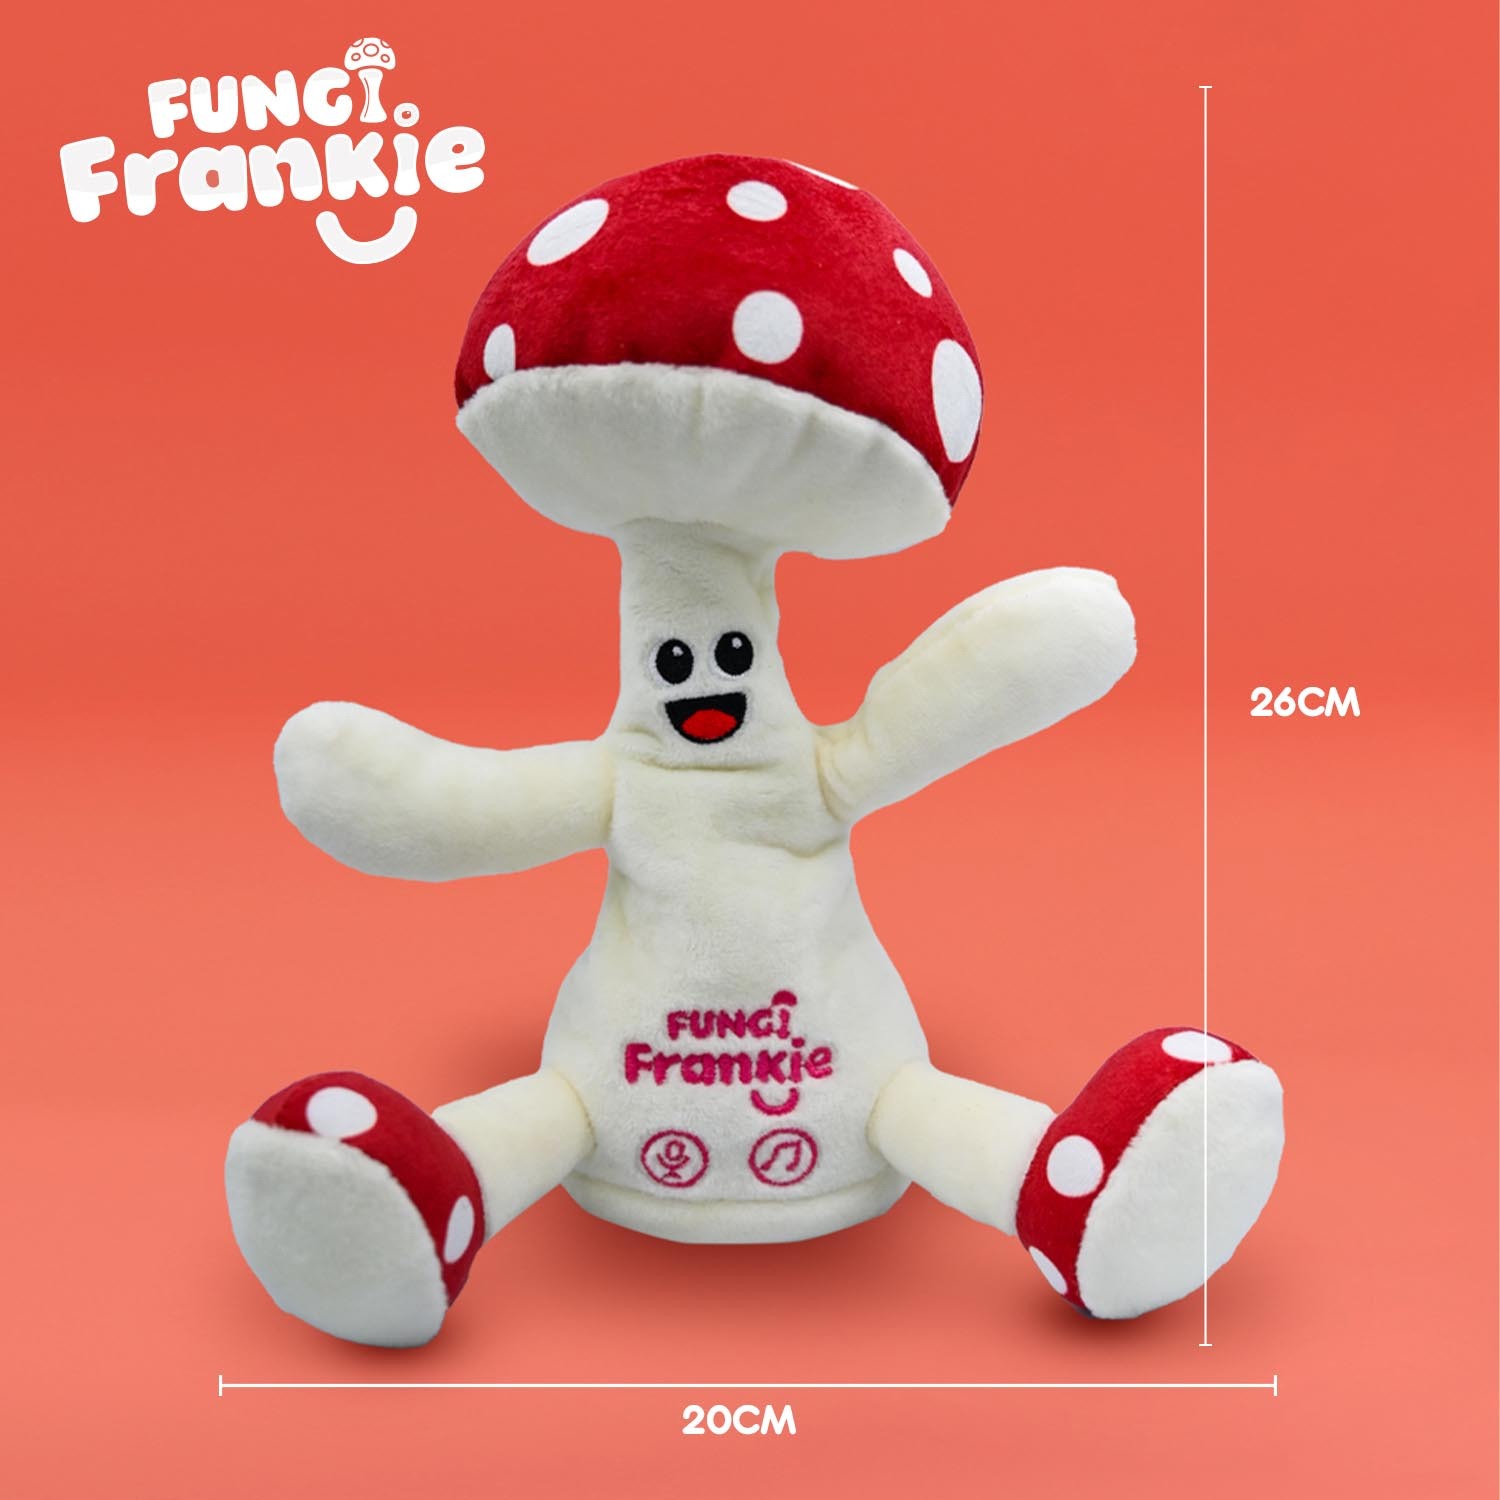 Fungi Frankie White Plush Interactive Soft Toy Image 11